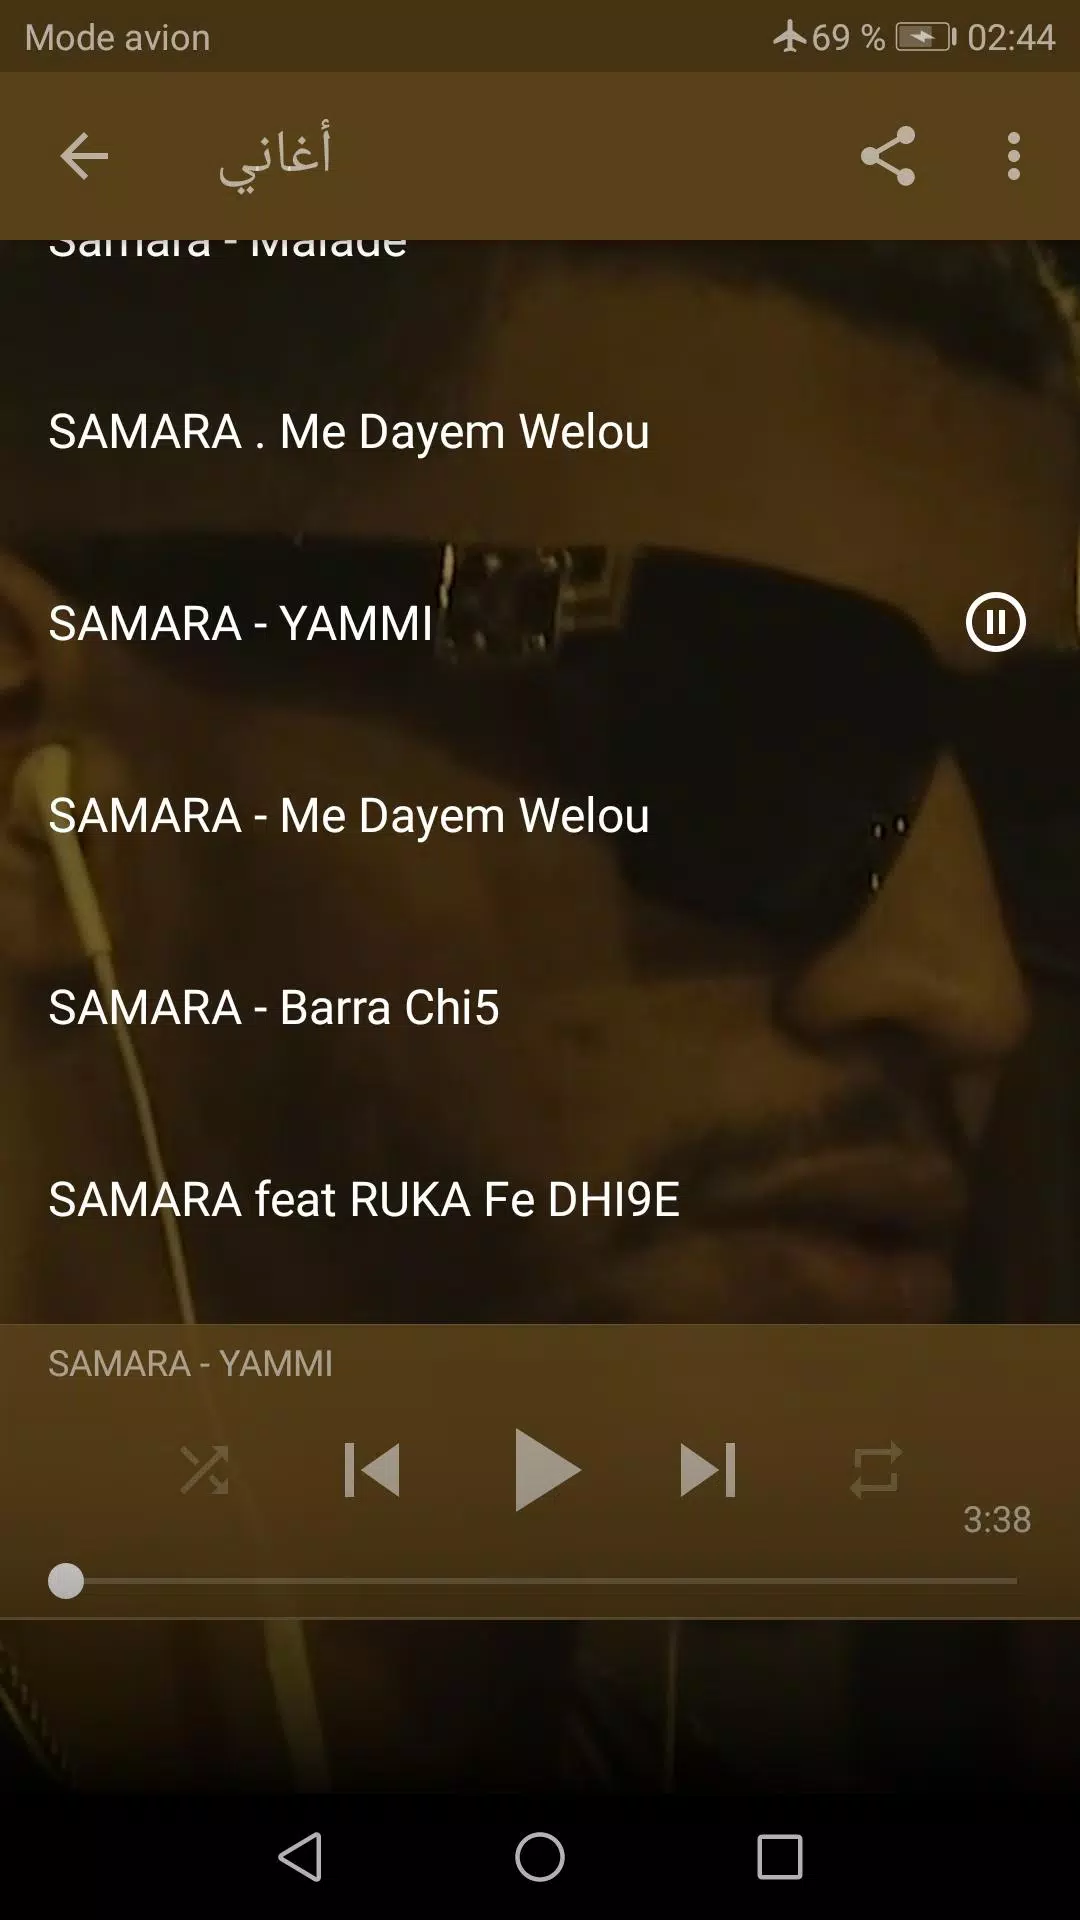 أغاني سمارة mp3 بدون نت 2019 SAMARA EL MONDO‎ I🎧 APK pour Android  Télécharger